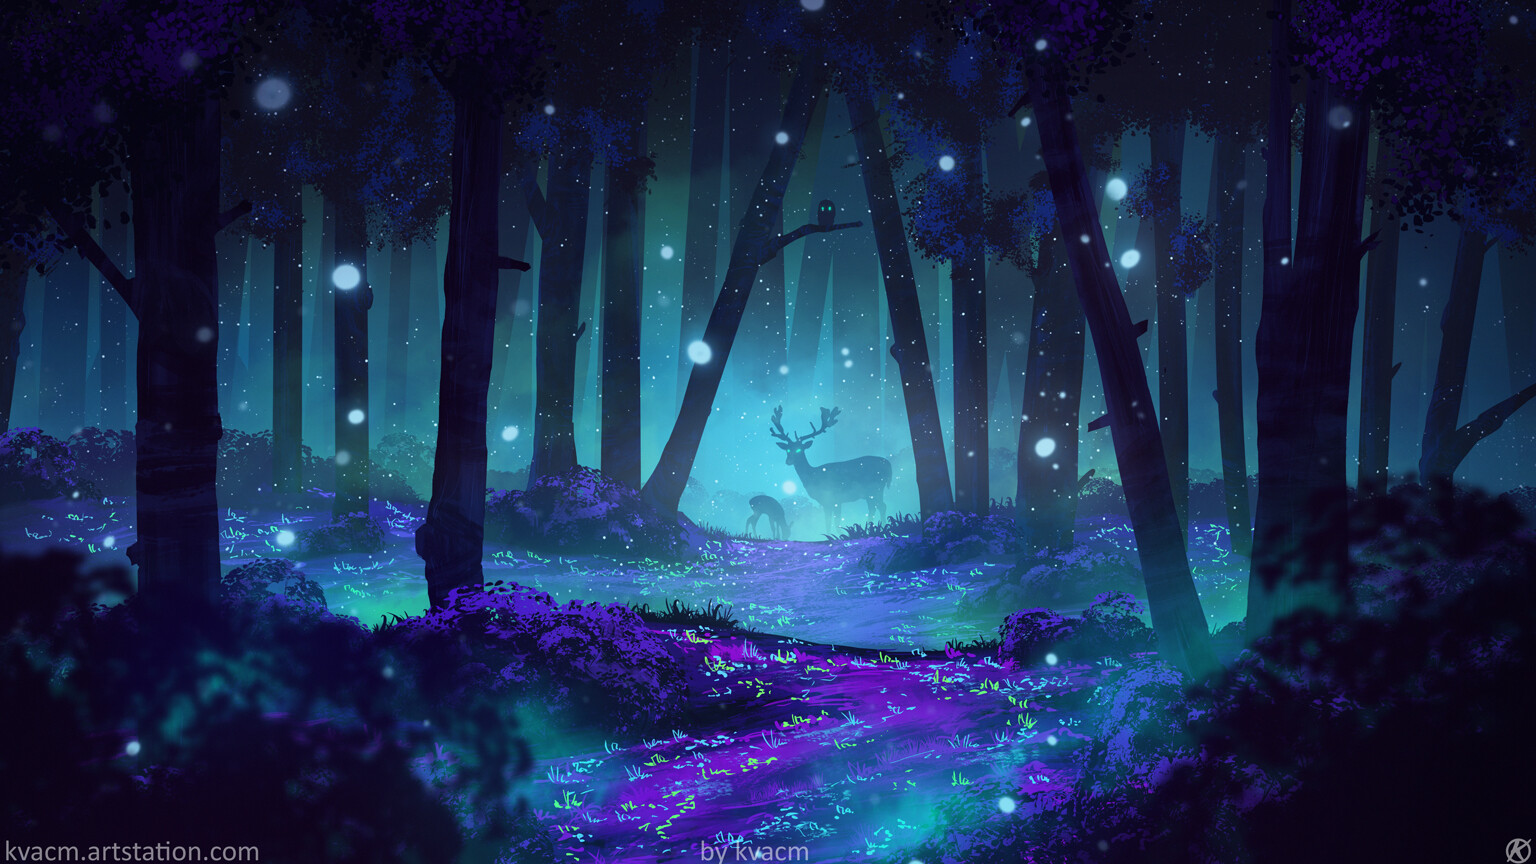 General 1536x864 digital art deer forest trees Kvacm silhouette fireflies